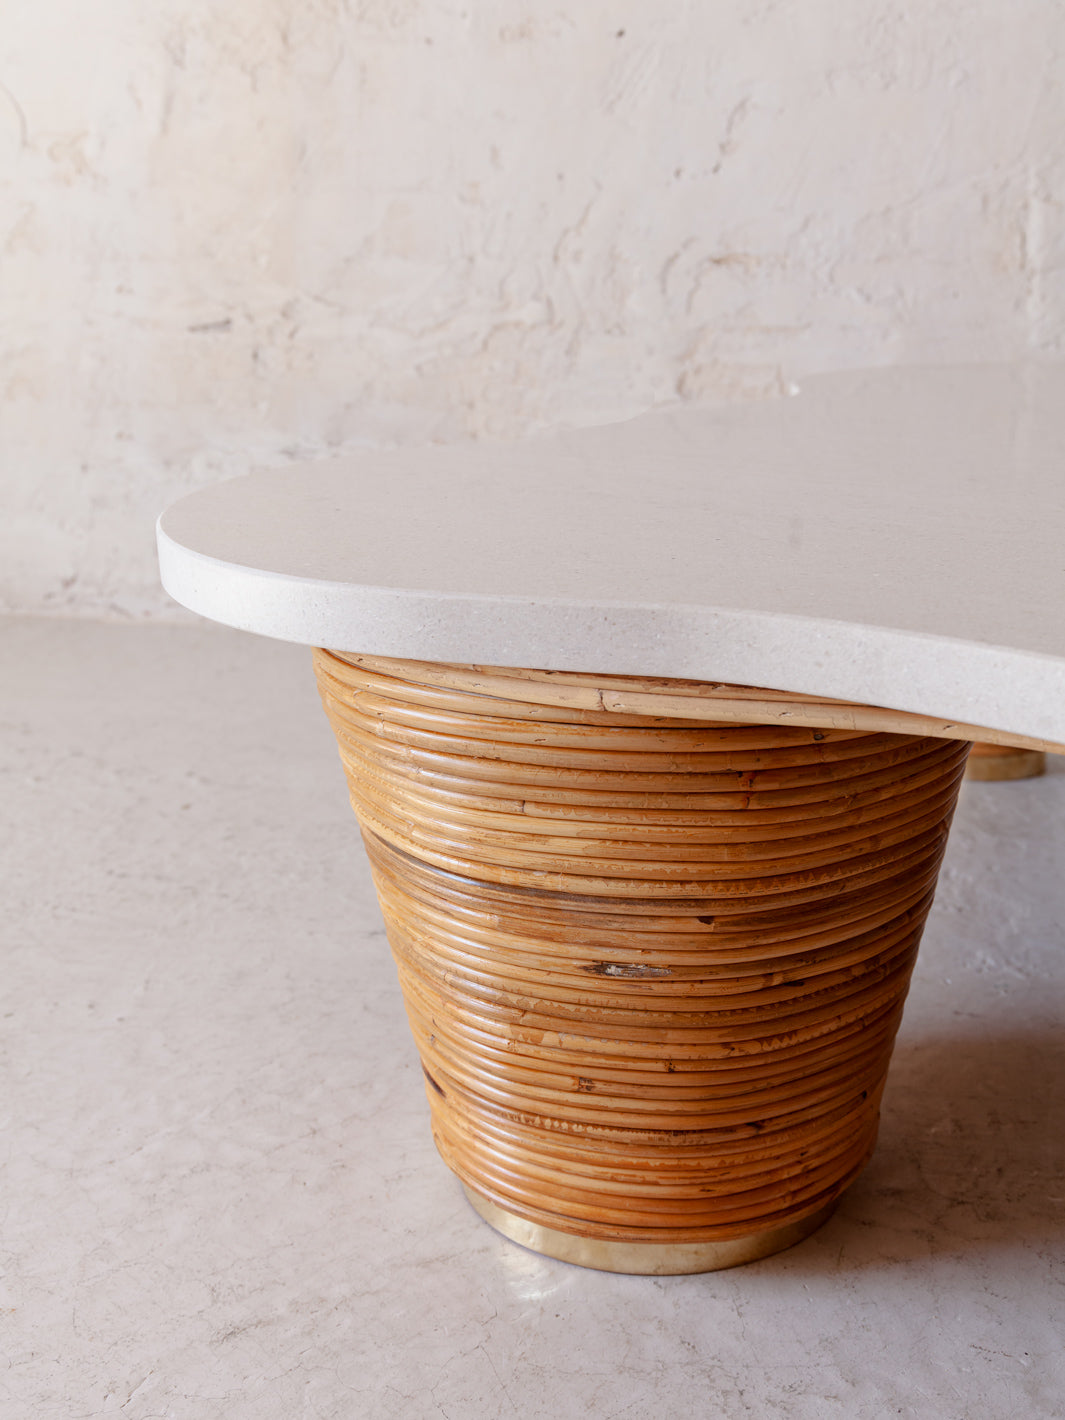 Table basse italienne en marbre et bambou